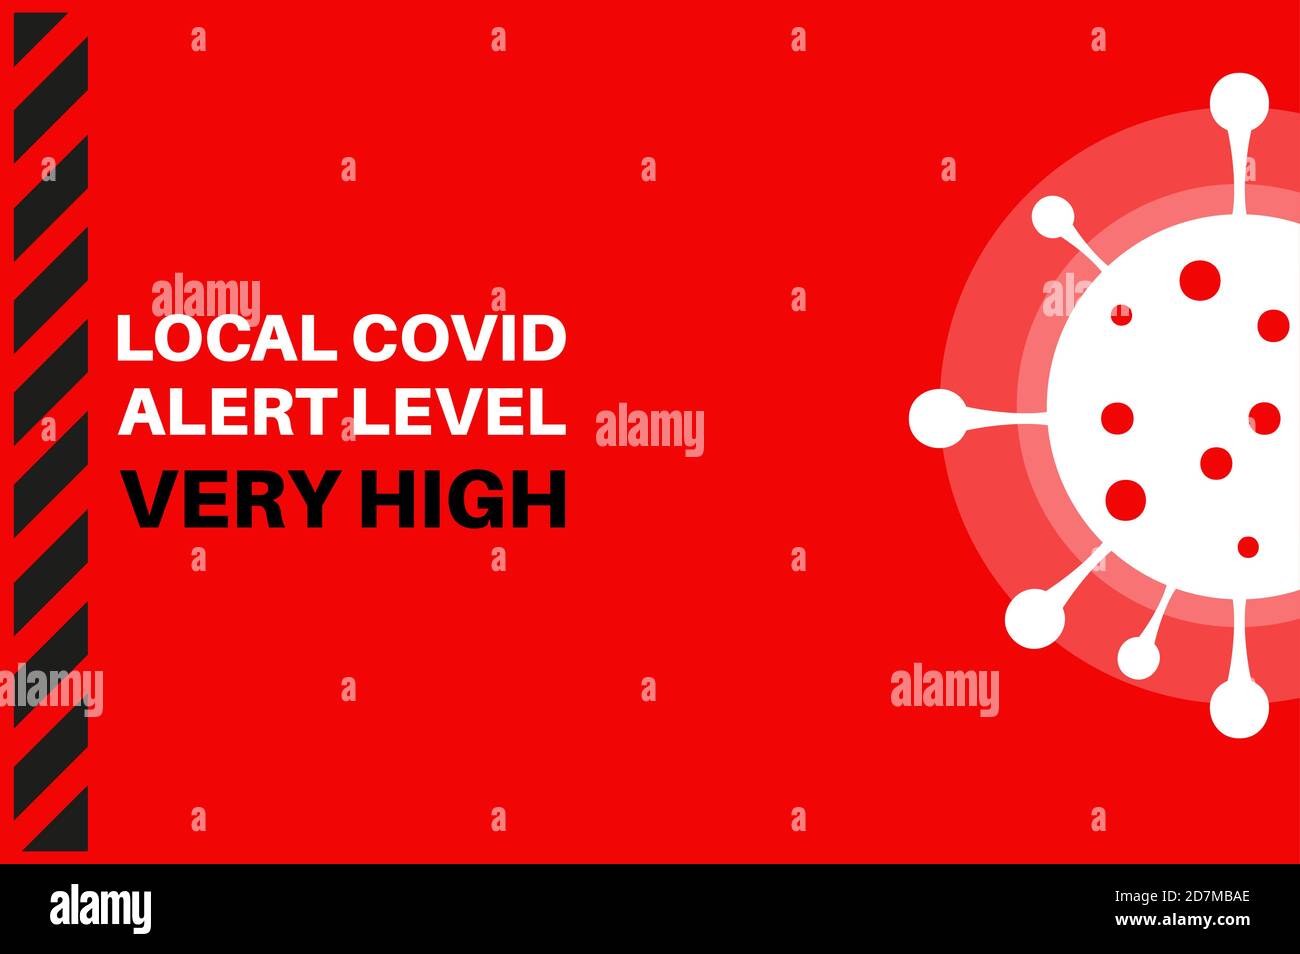 Very High Local Covid Alert Level (Tier 2) Vector Illustration Stock Vector